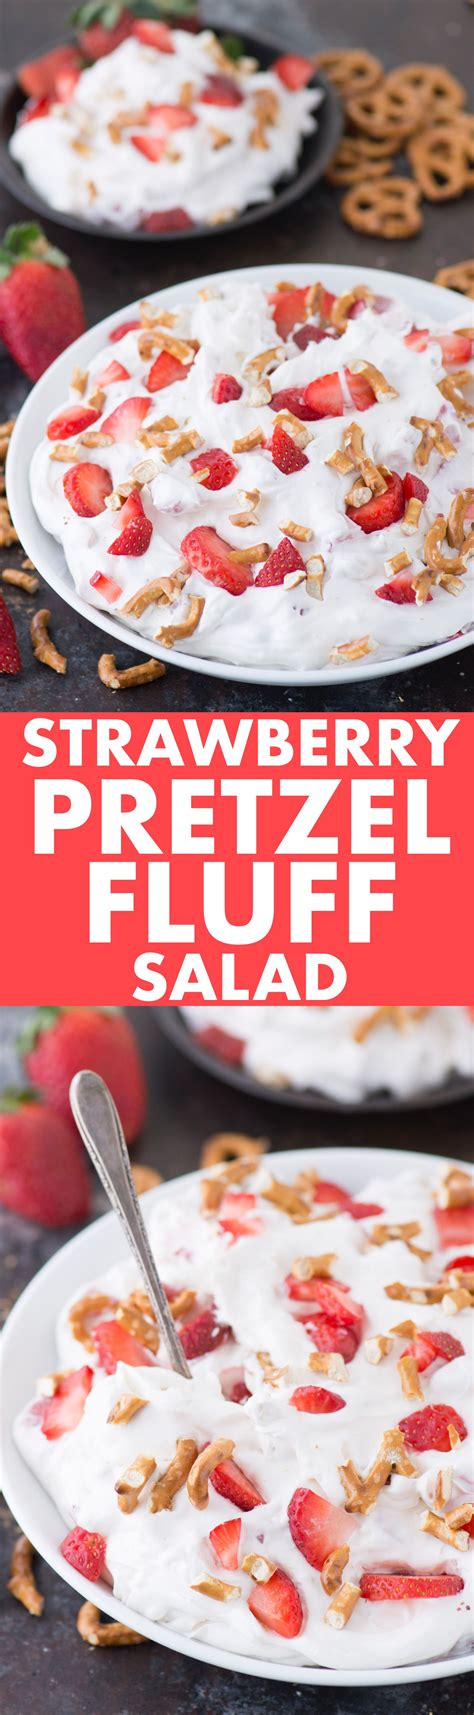 Strawberry Pretzel Fluff Salad A Dessert Salad That Reminds Us Of The